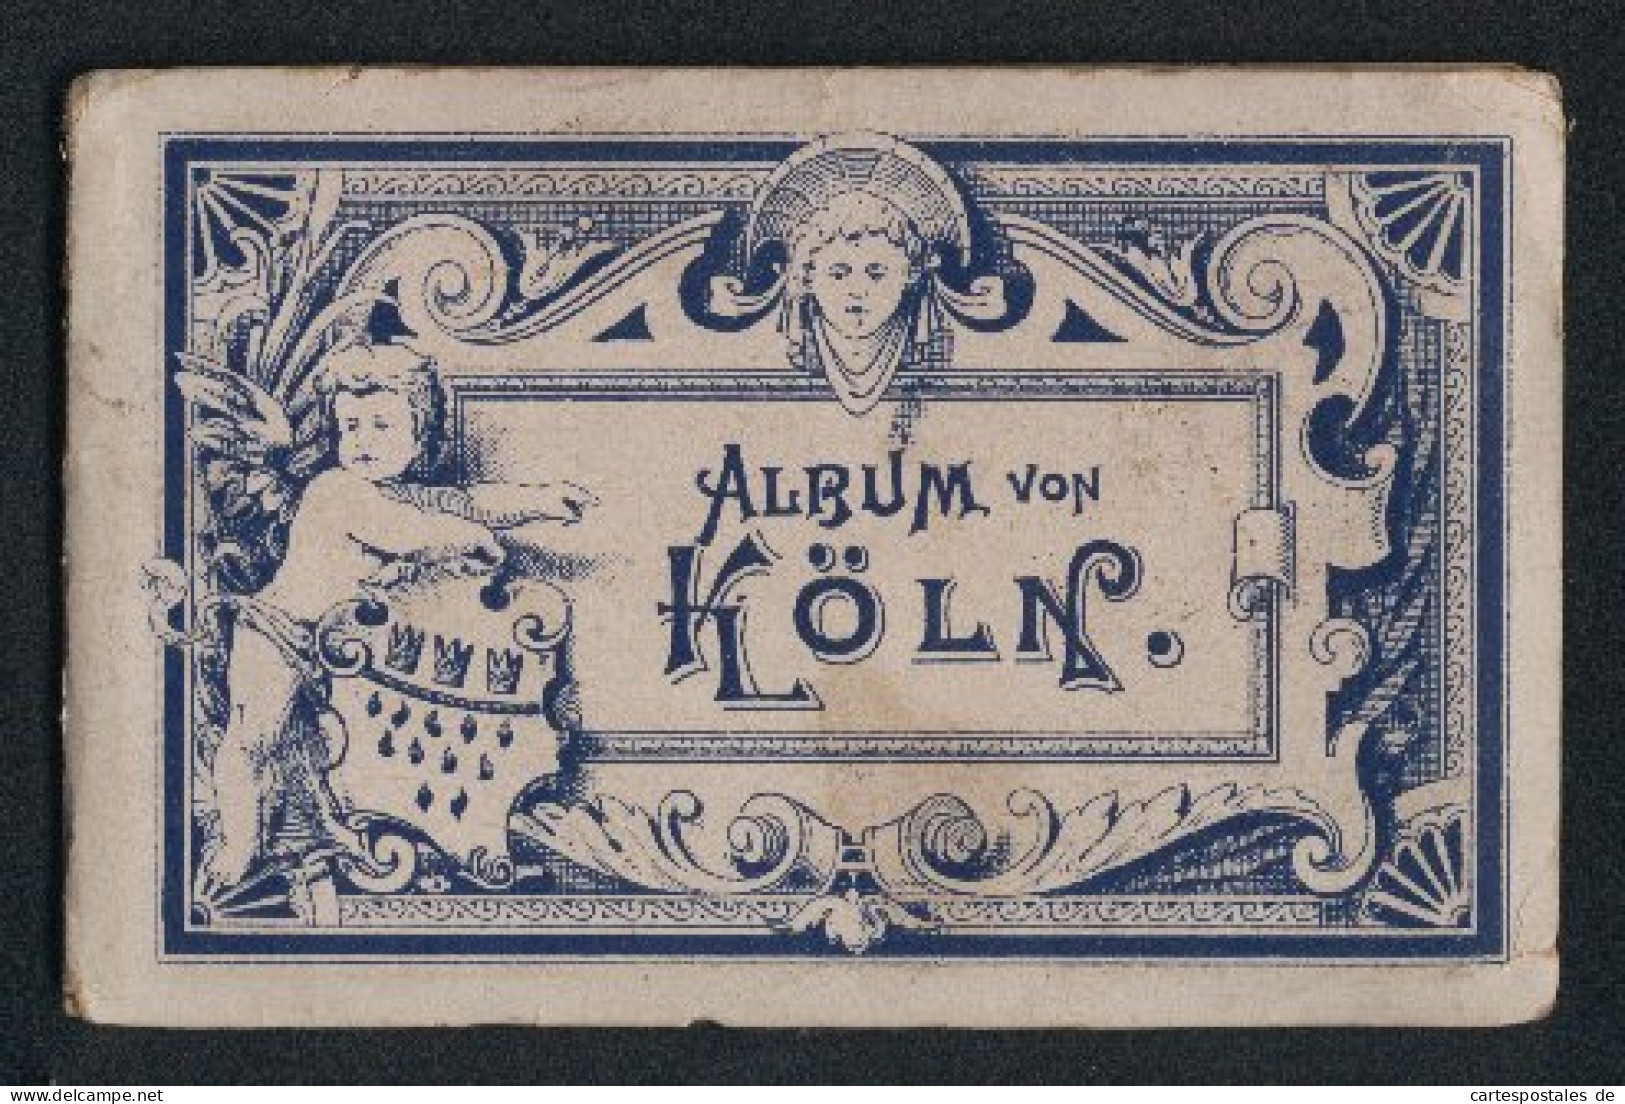 Leporello-Album Köln Mit 12 Lithographie-Ansichten, Bahnhof, Flora, Hohenzollerring, Museum Walraff-Richartz, Dom, Po  - Litografia